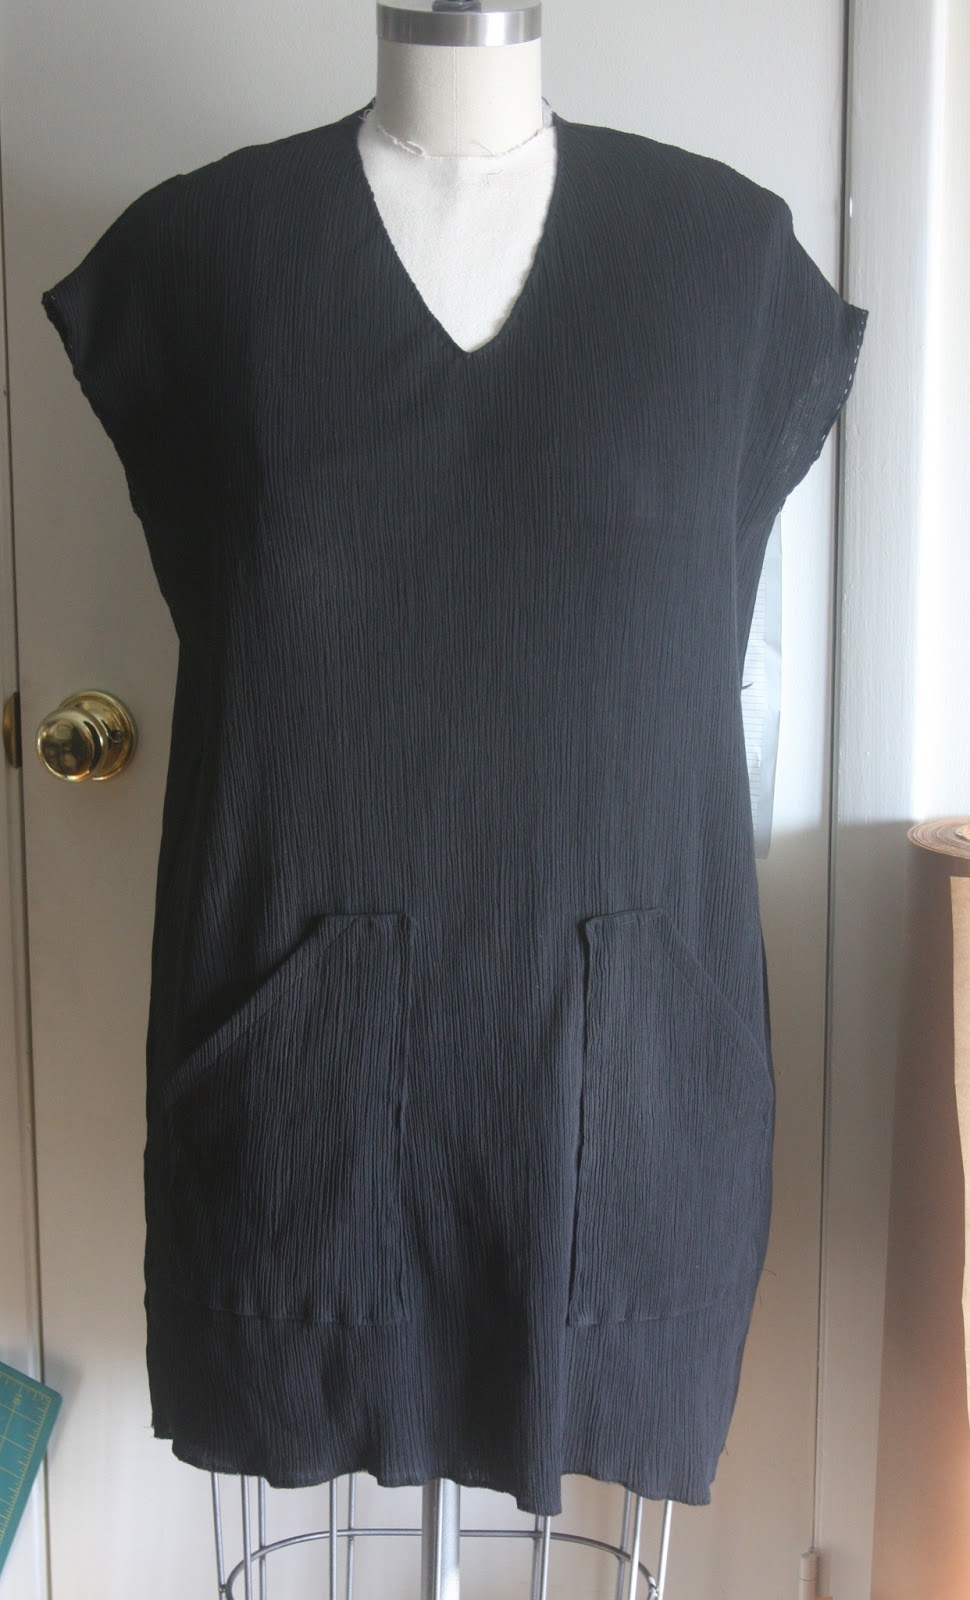 Adonising: Summer dress Version 1 - Black Gauze swimsuit cover up.